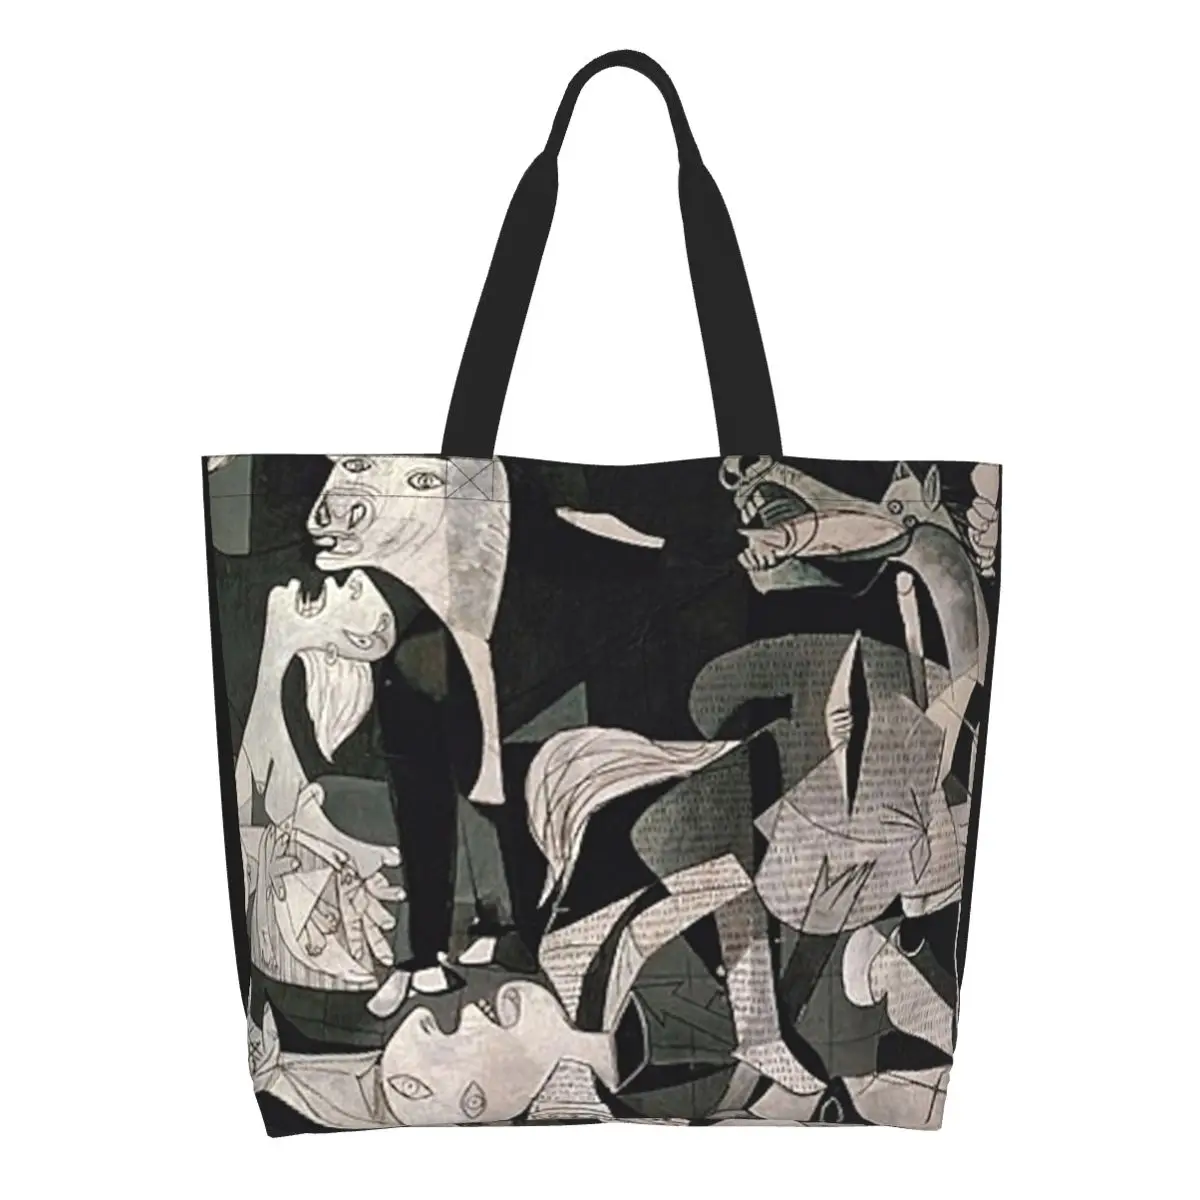 

Spain Pablo Picasso Guernica Grocery Shopping Tote Bag Women Cute Canvas Shopper Shoulder Bags Big Capacity Handbag